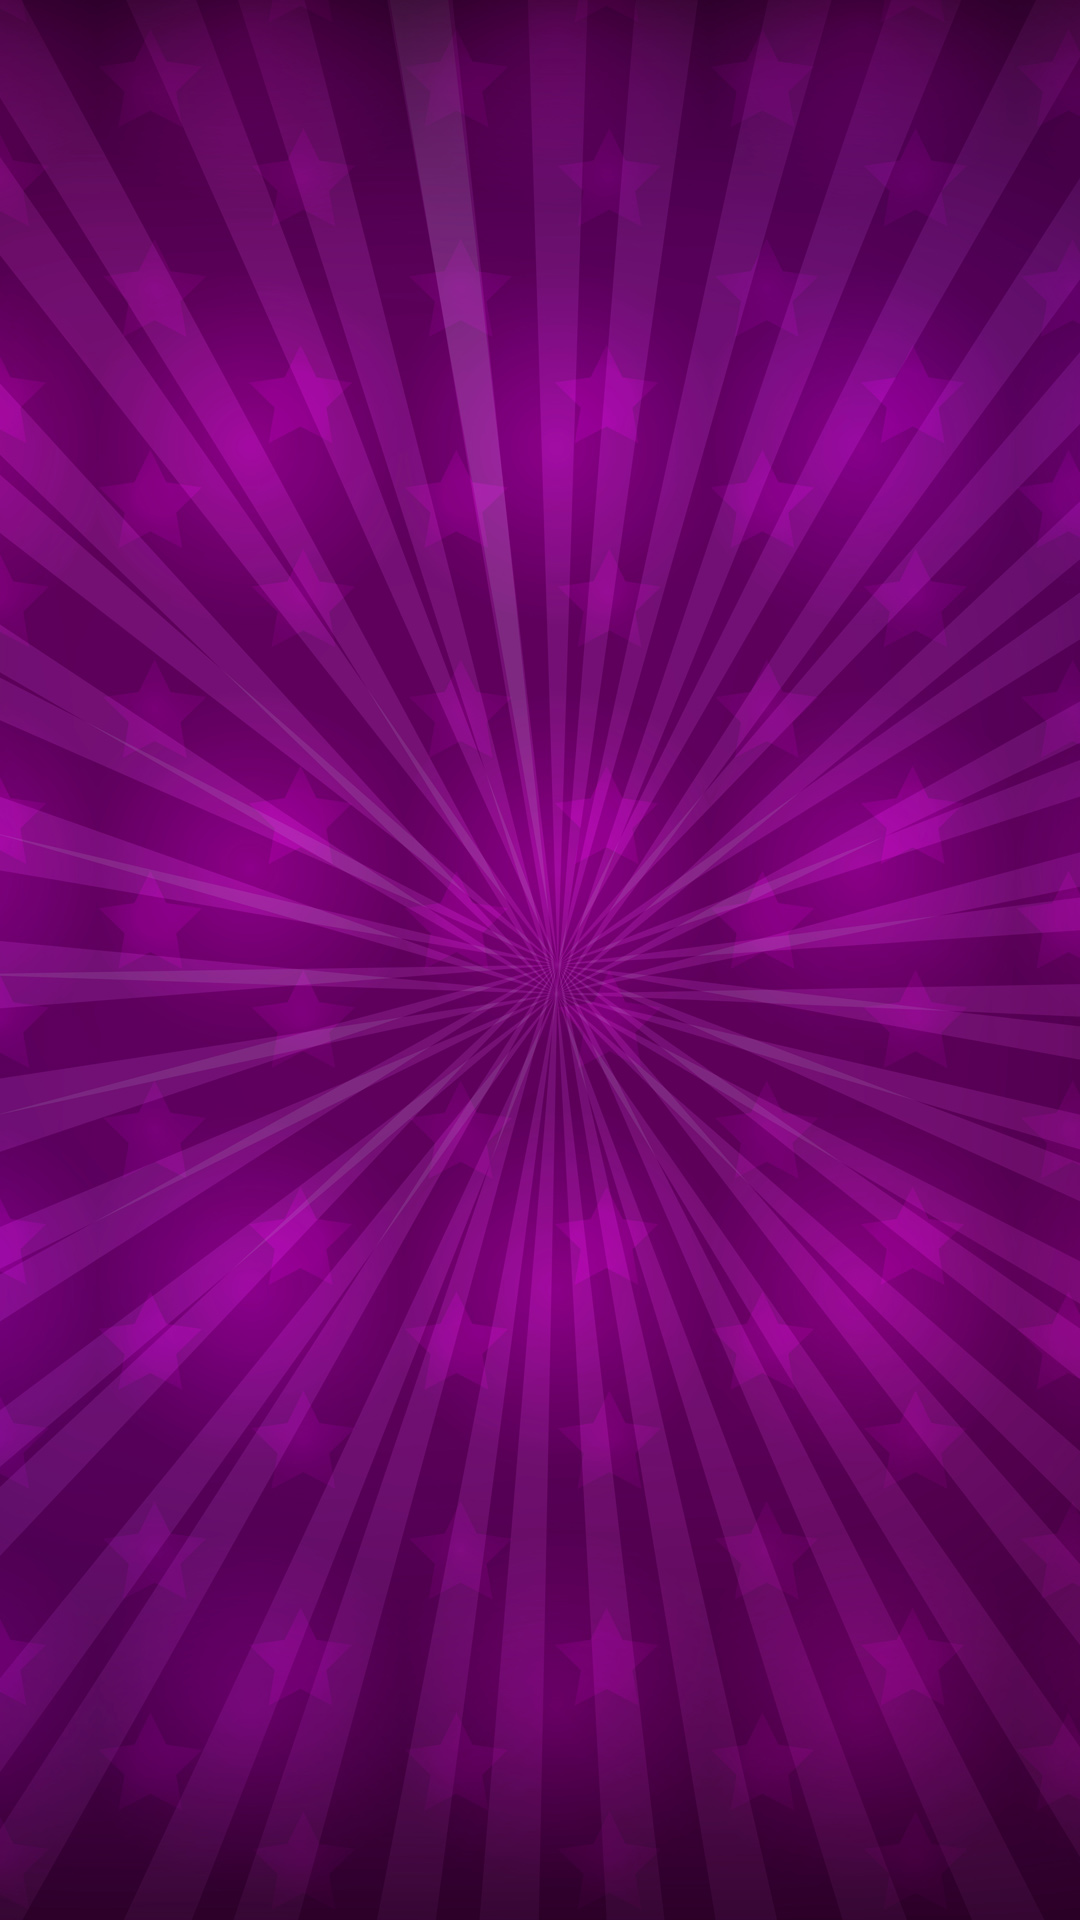 Purple Iphone 6s Plus Wallpaper Gallery Yopriceville High